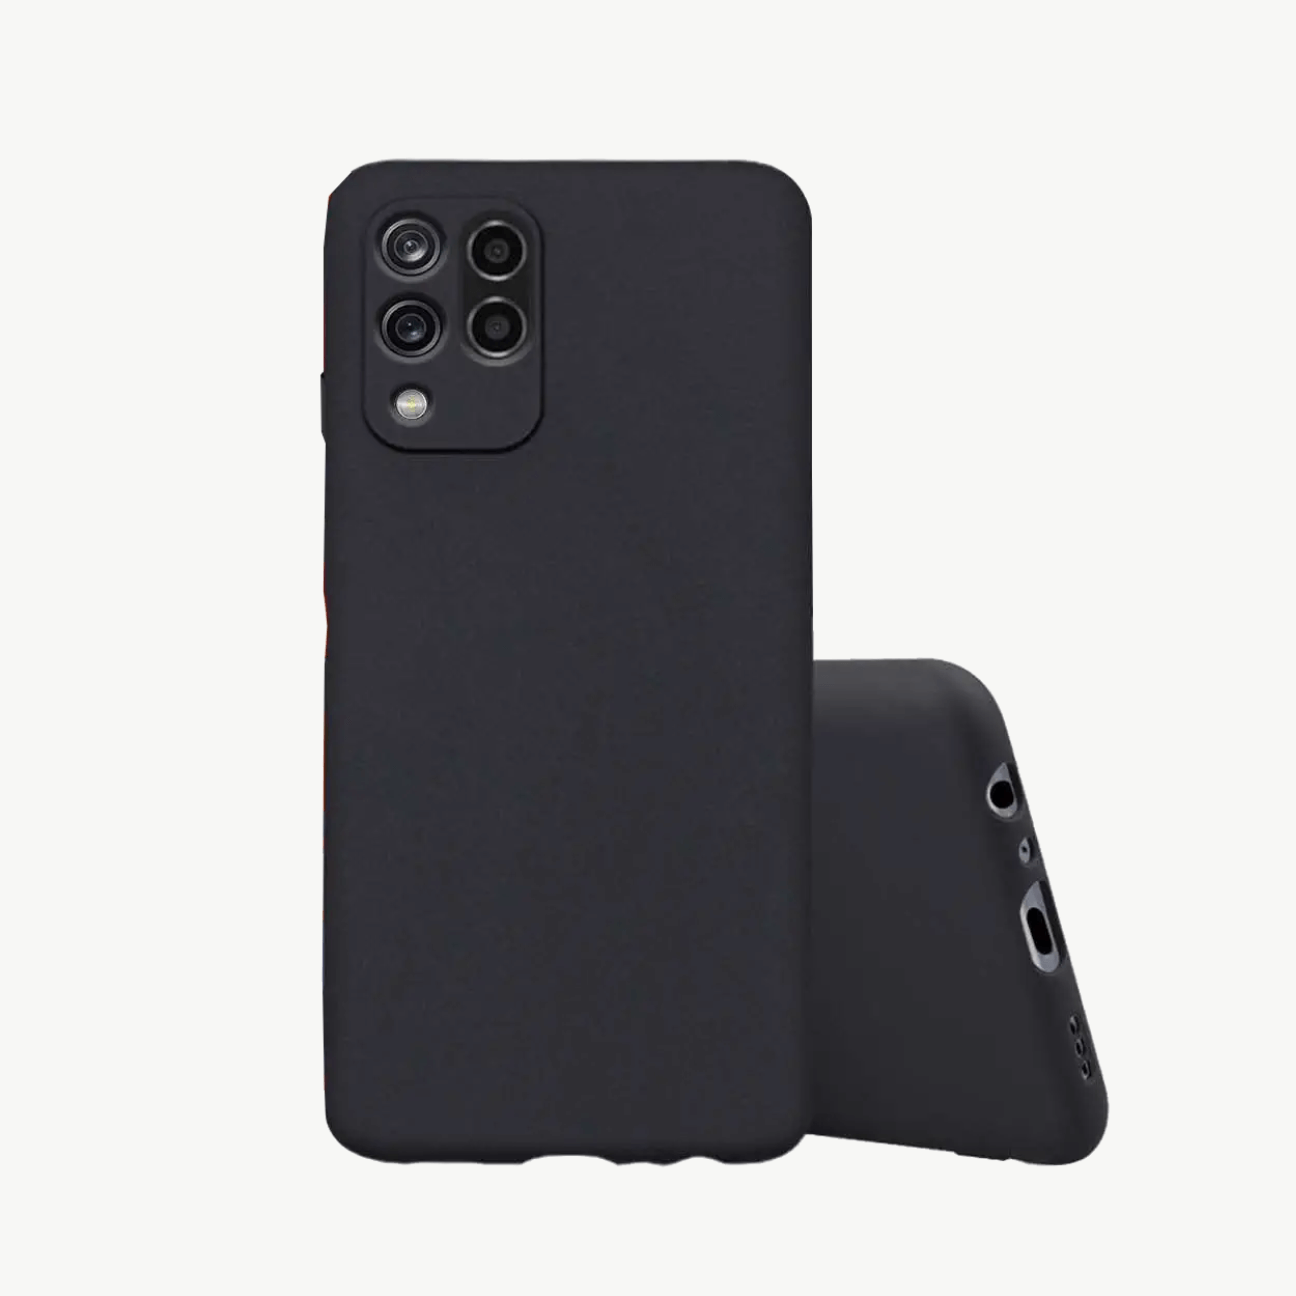 Xiaomi Redmi Y1 Lite Black Soft Silicone Phone Case